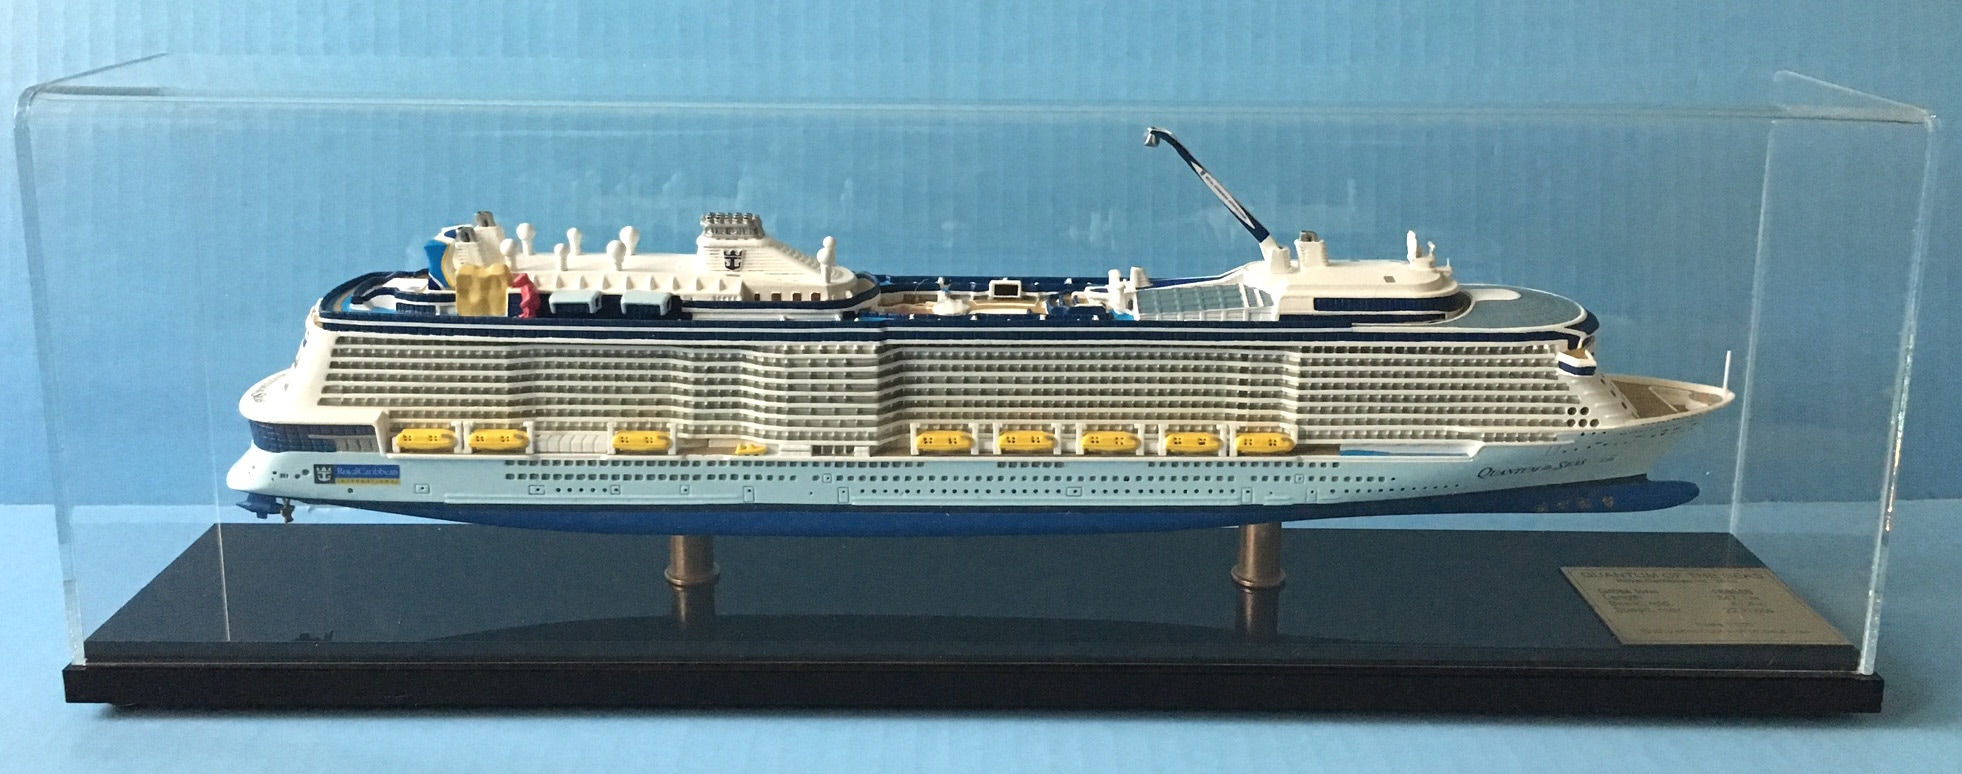 Quantum of the Seas cruise ship model Picture